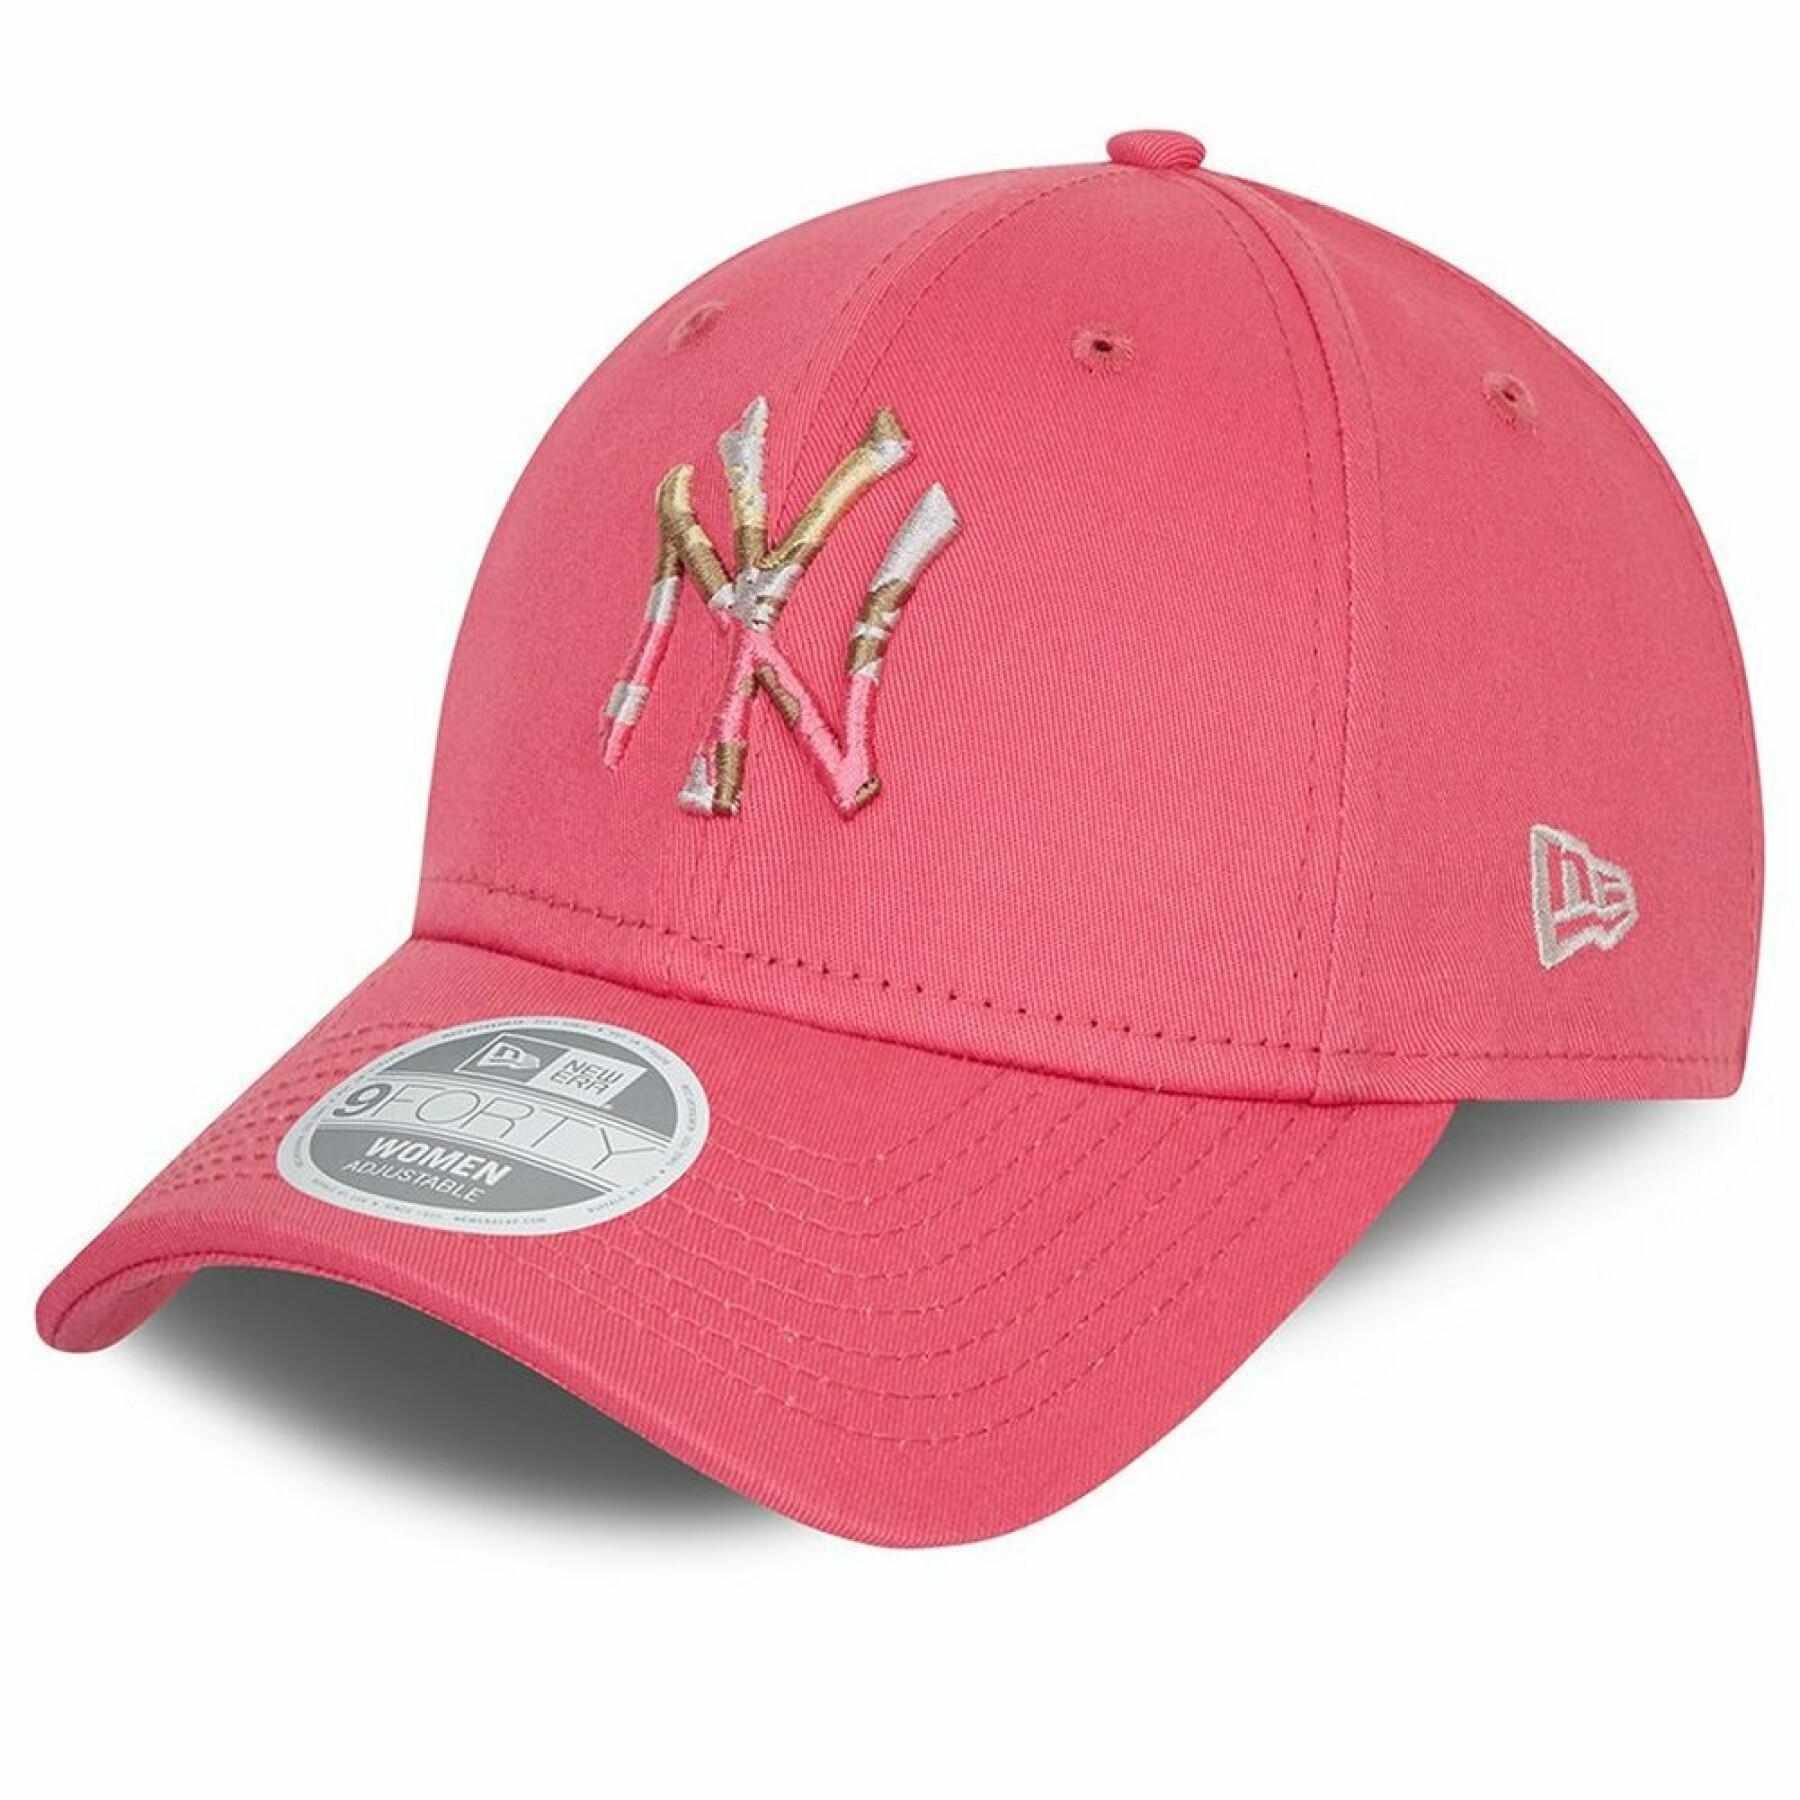 Women's cap New Era 9forty New York Yankees essential